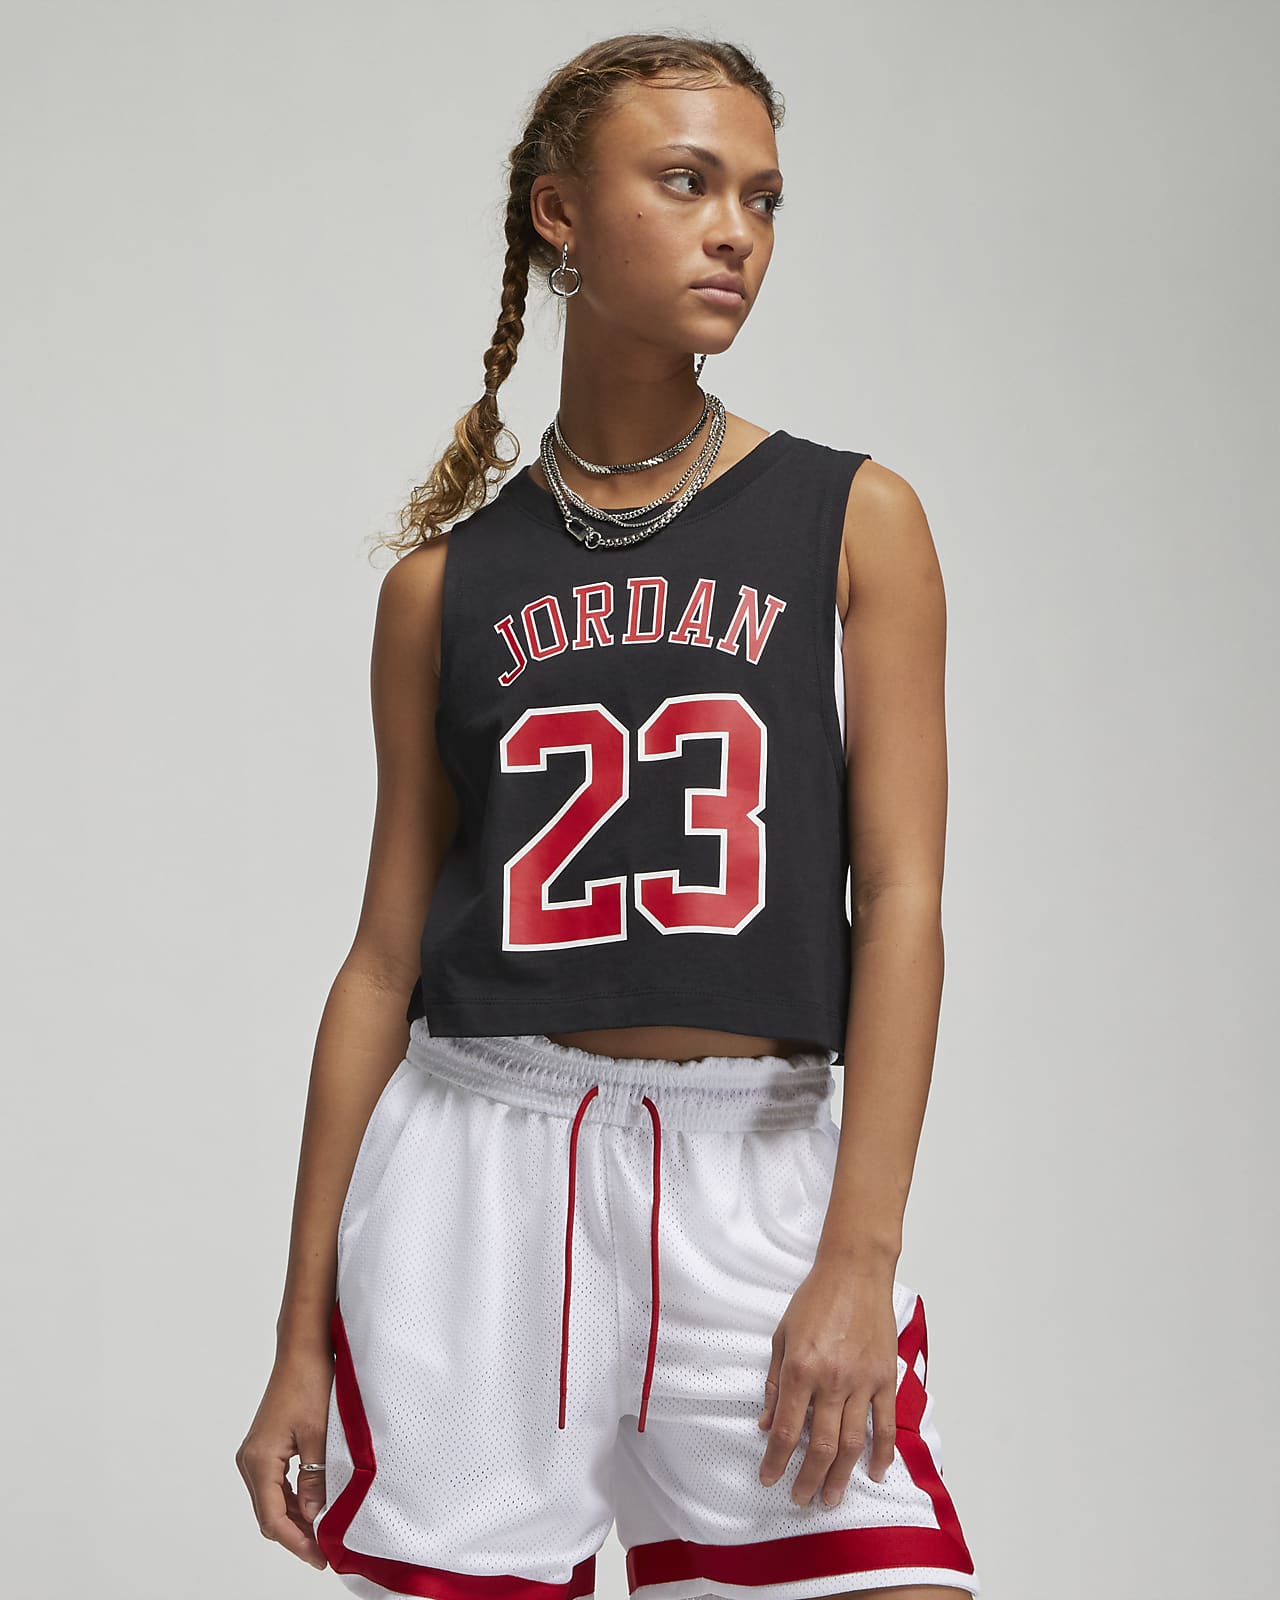 Jordan (Her)itage Camiseta de tirantes Mujer. Nike ES